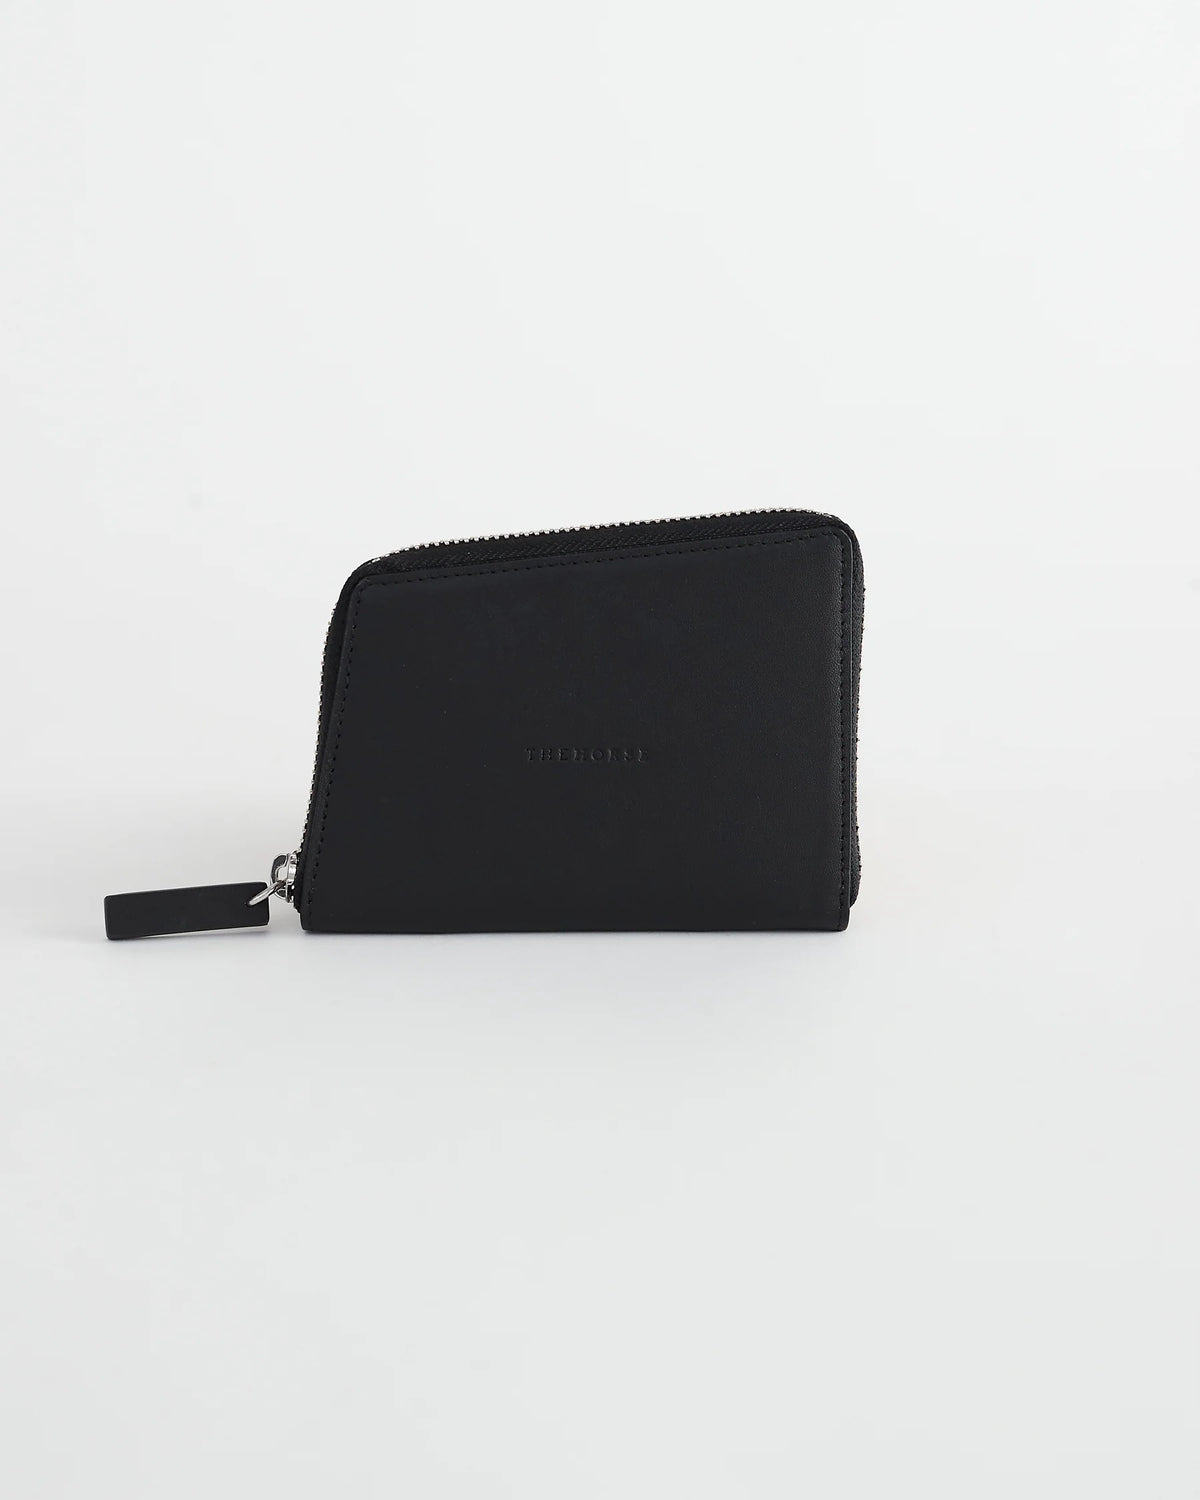 The Bo Concept Wallet -Black